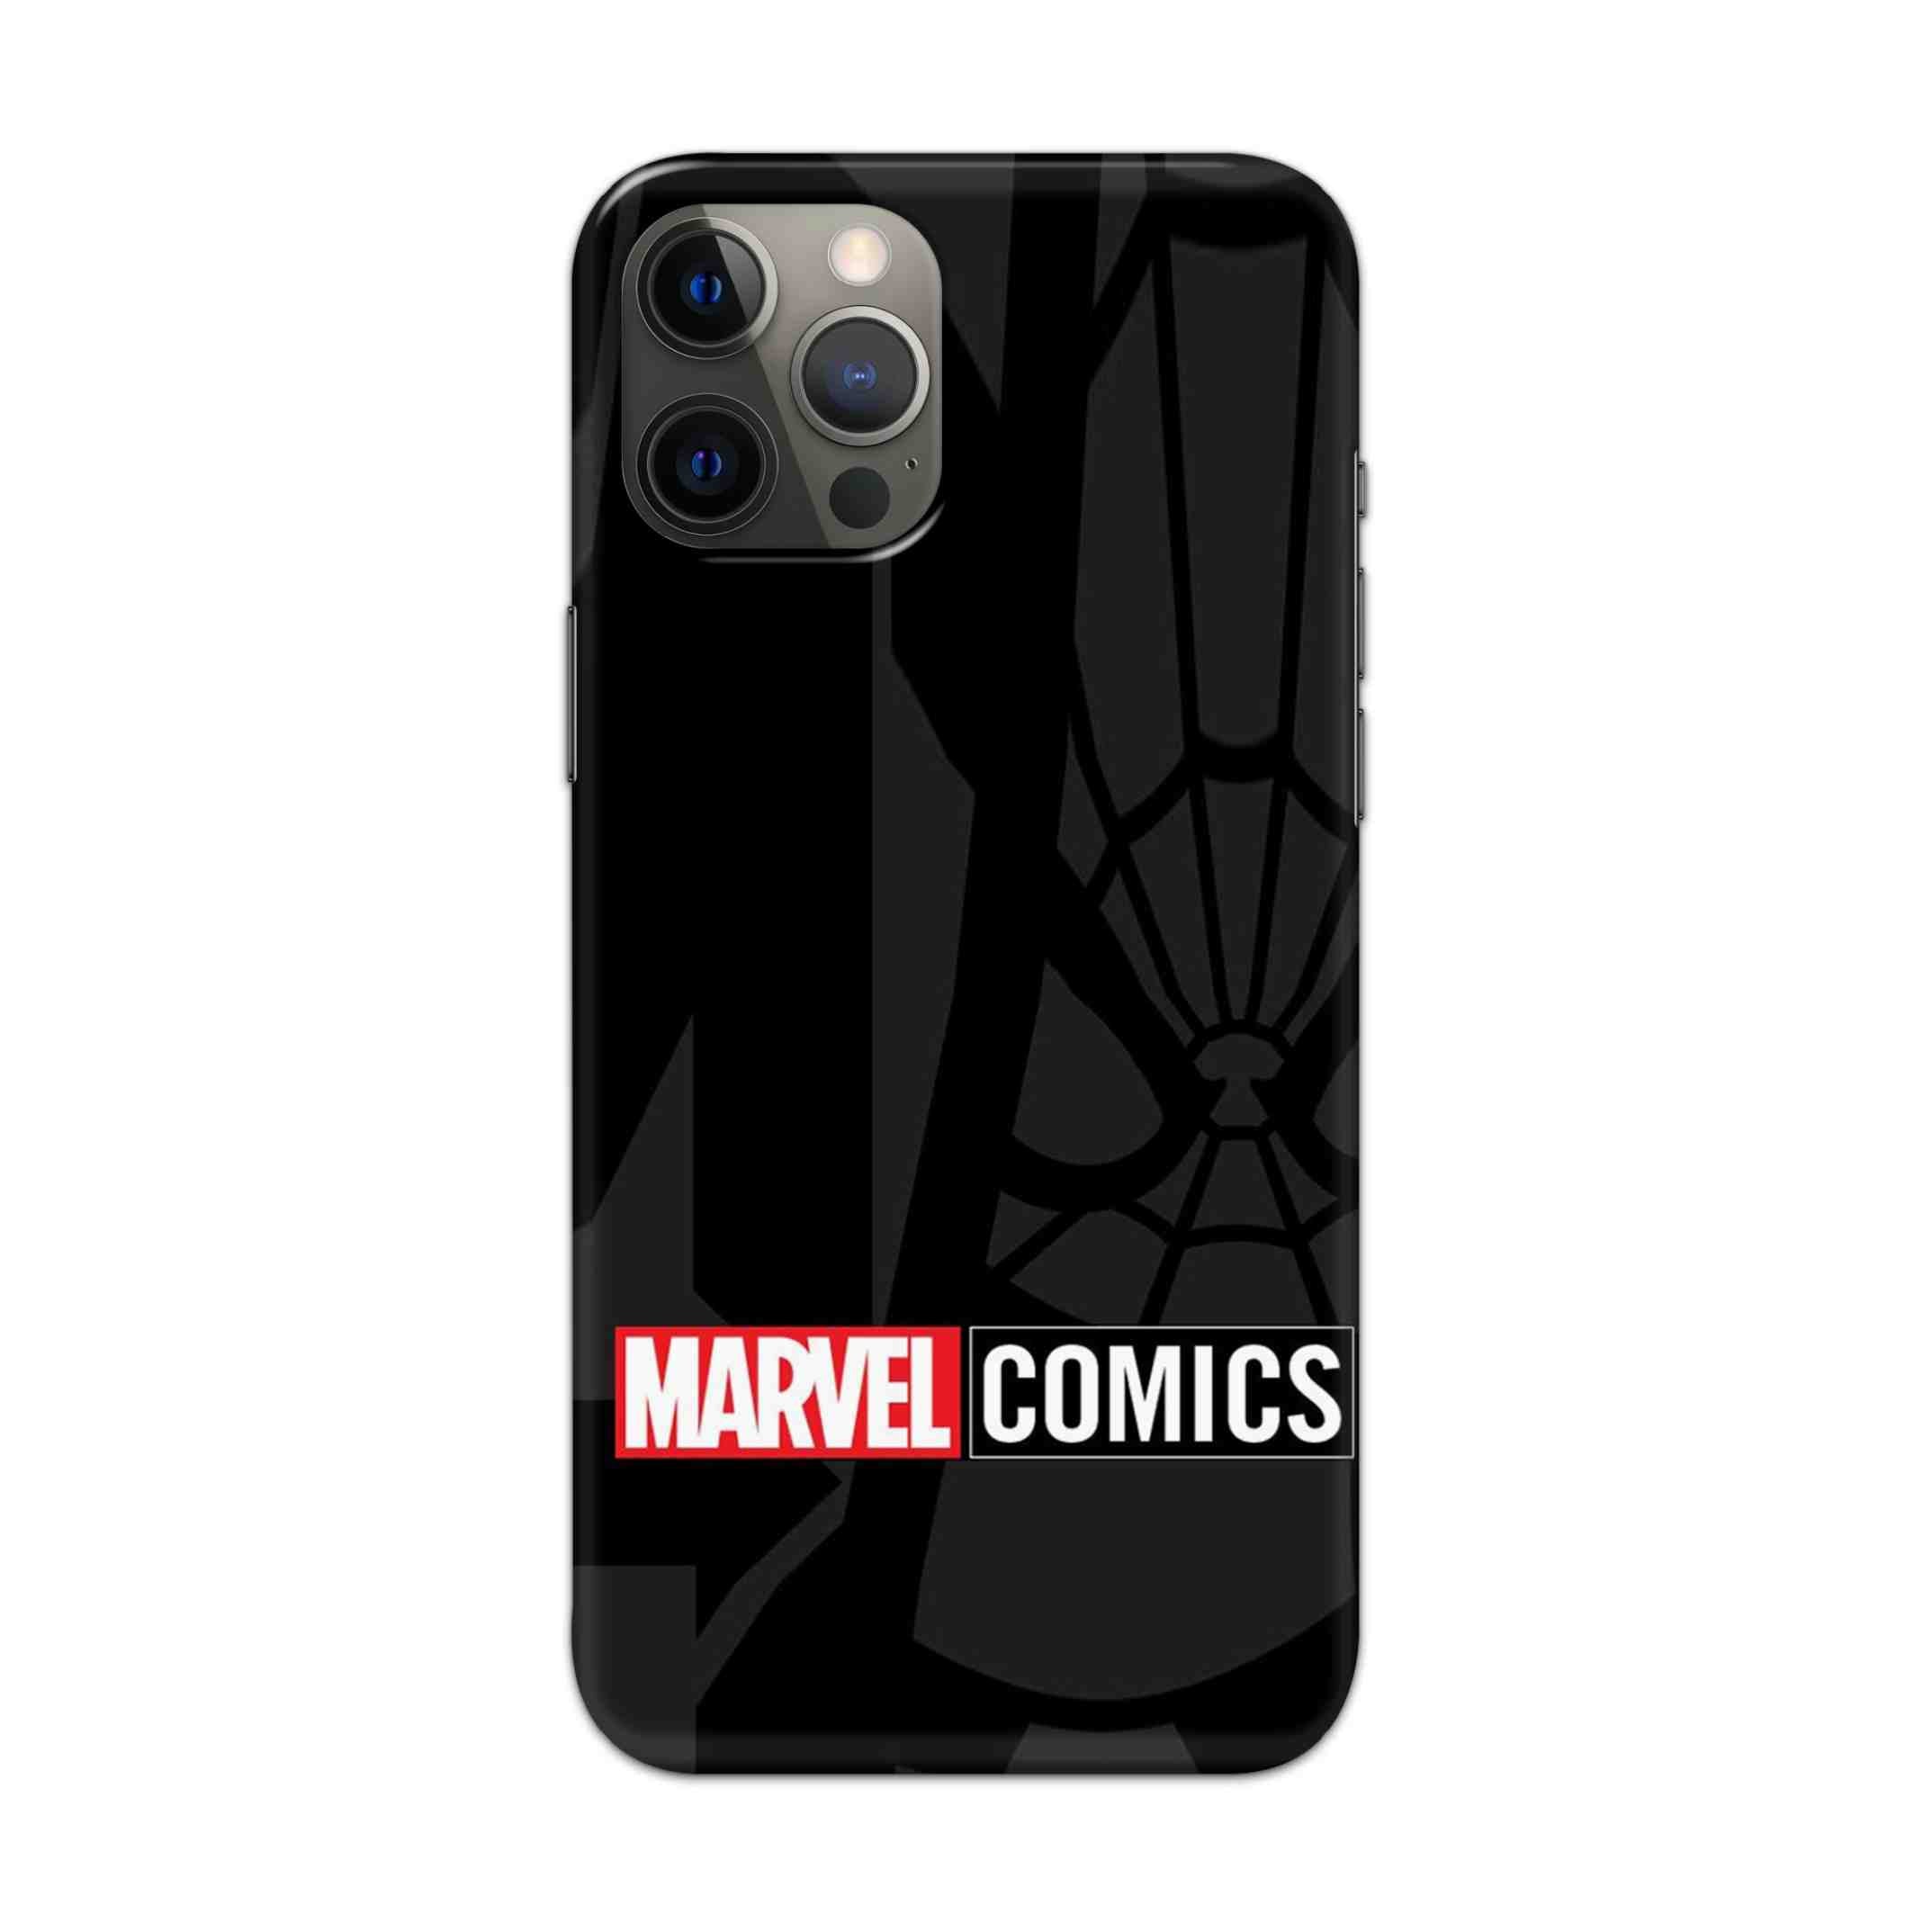 Buy Marvel Comics Hard Back Mobile Phone Case/Cover For Apple iPhone 13 Pro Online